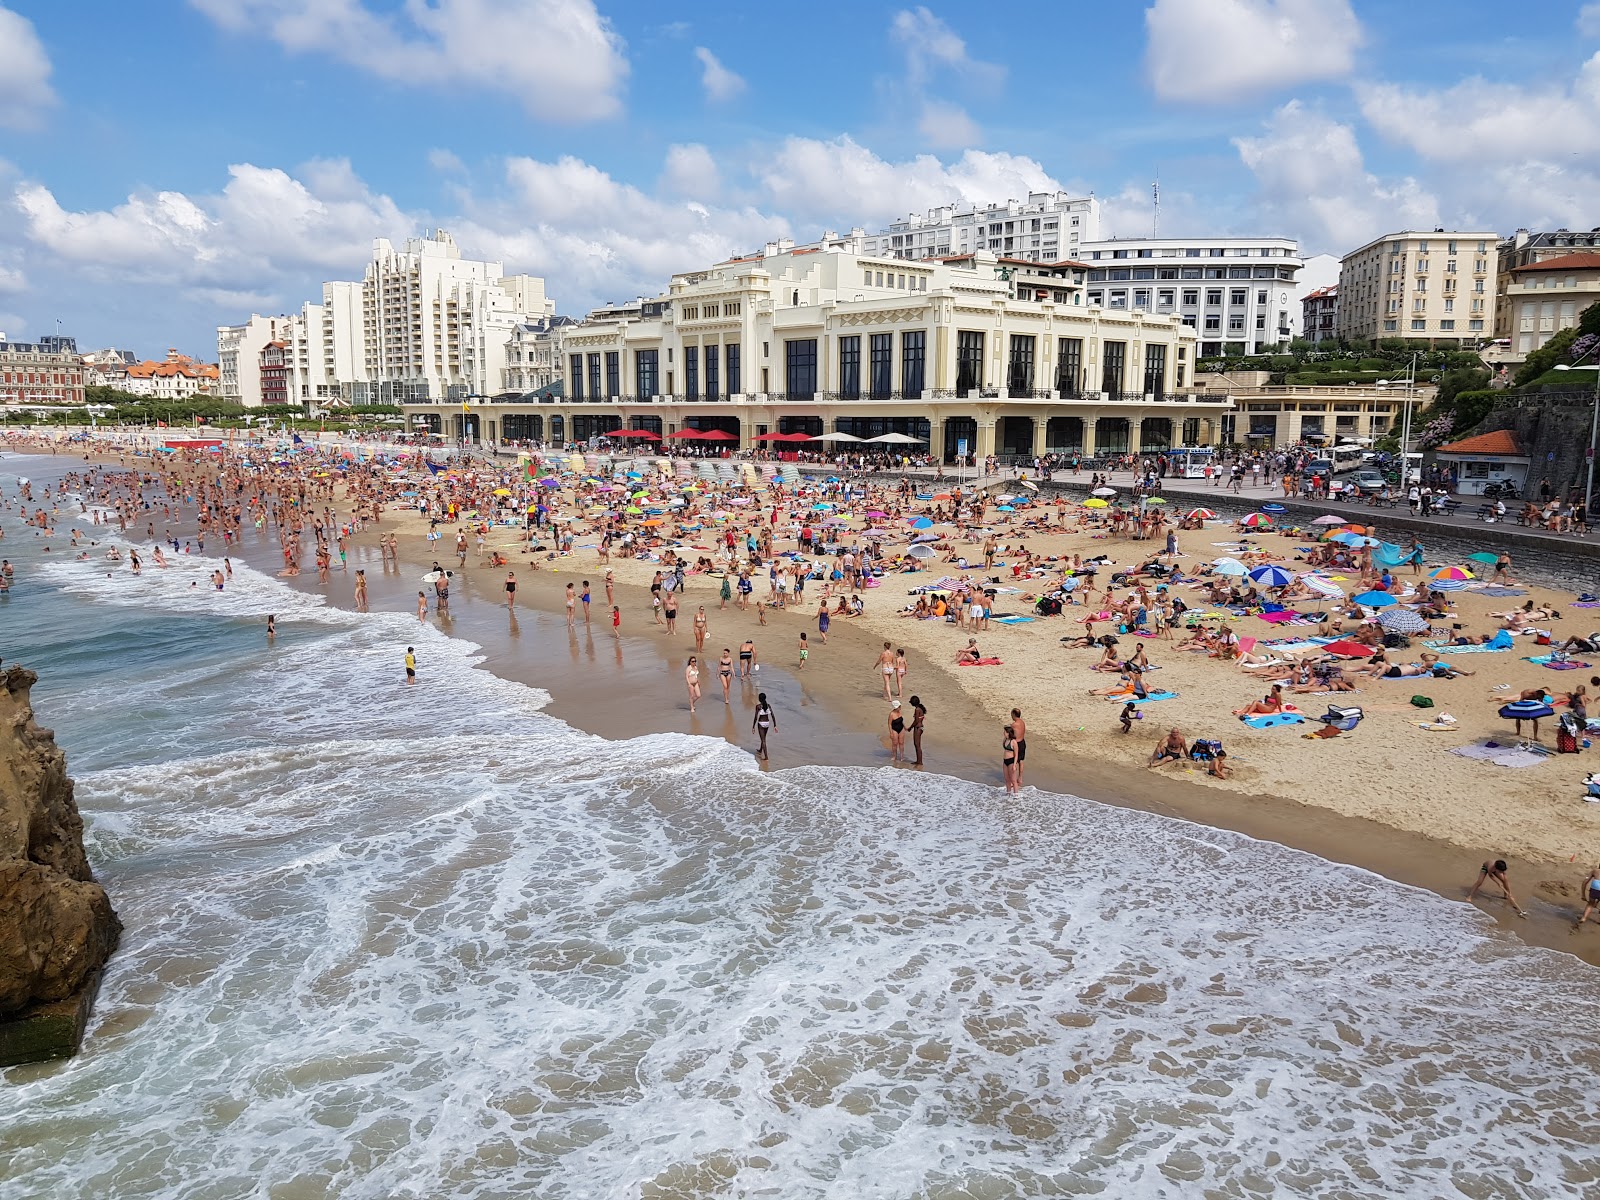 Photo of Plage de Biarritz with spacious shore